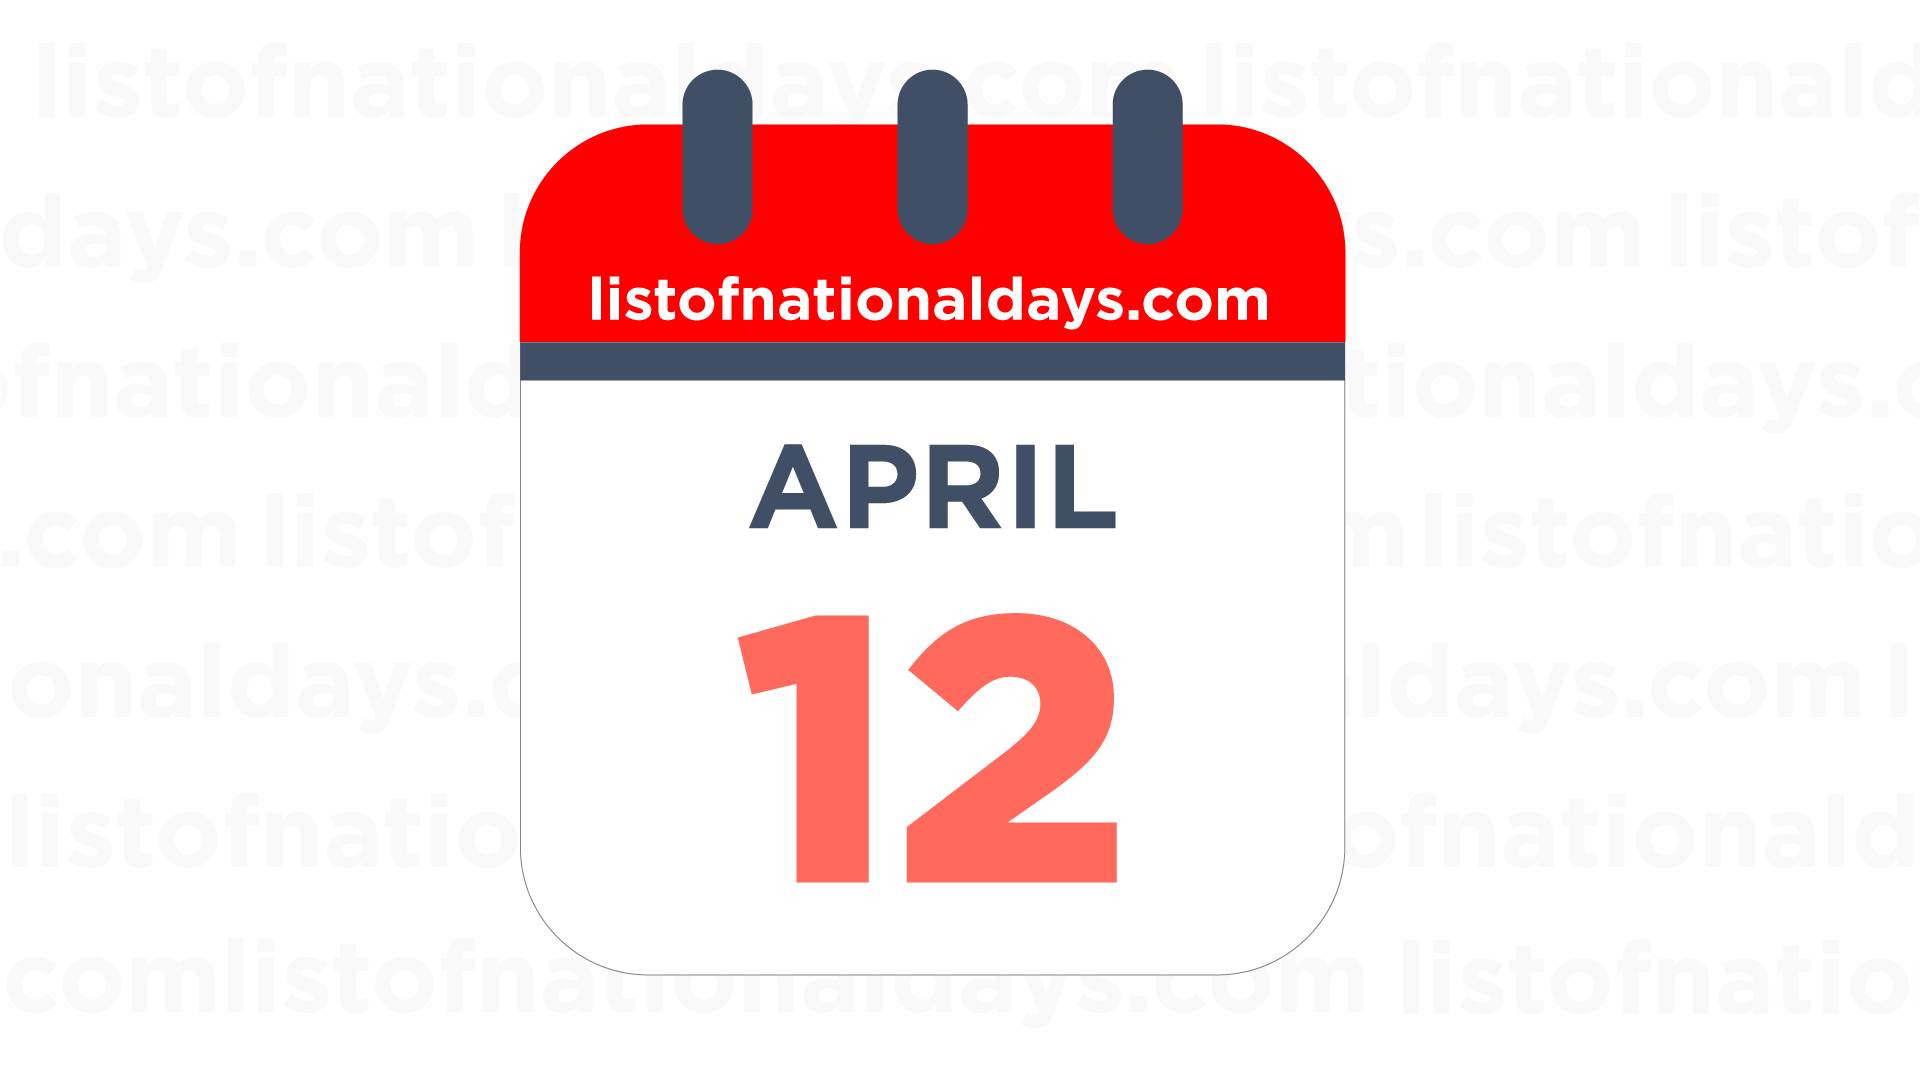 APRIL 12TH National Holidays, Observances & Famous Birthdays